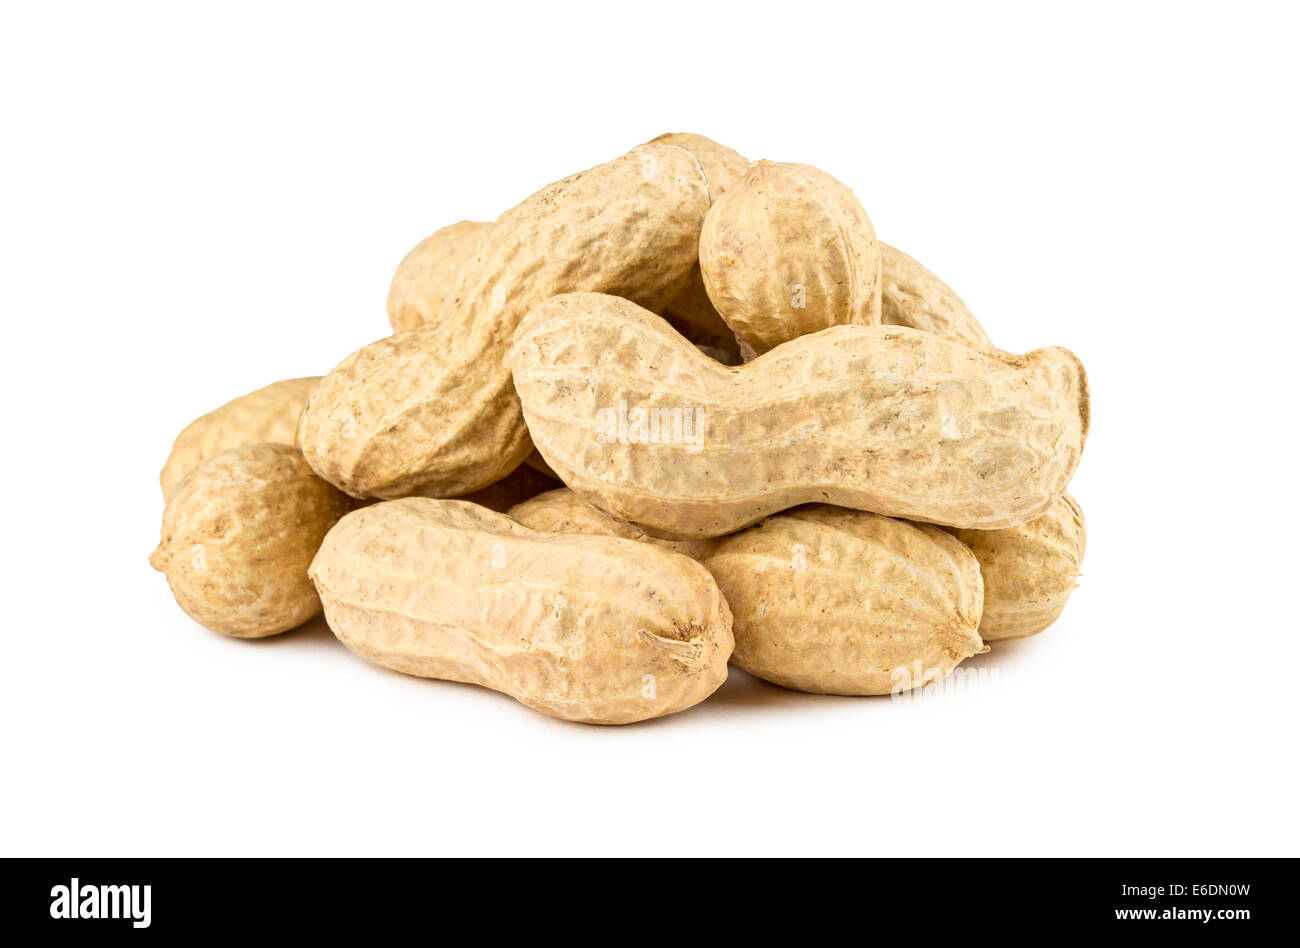 isolated peanuts on hite background Stock Photo